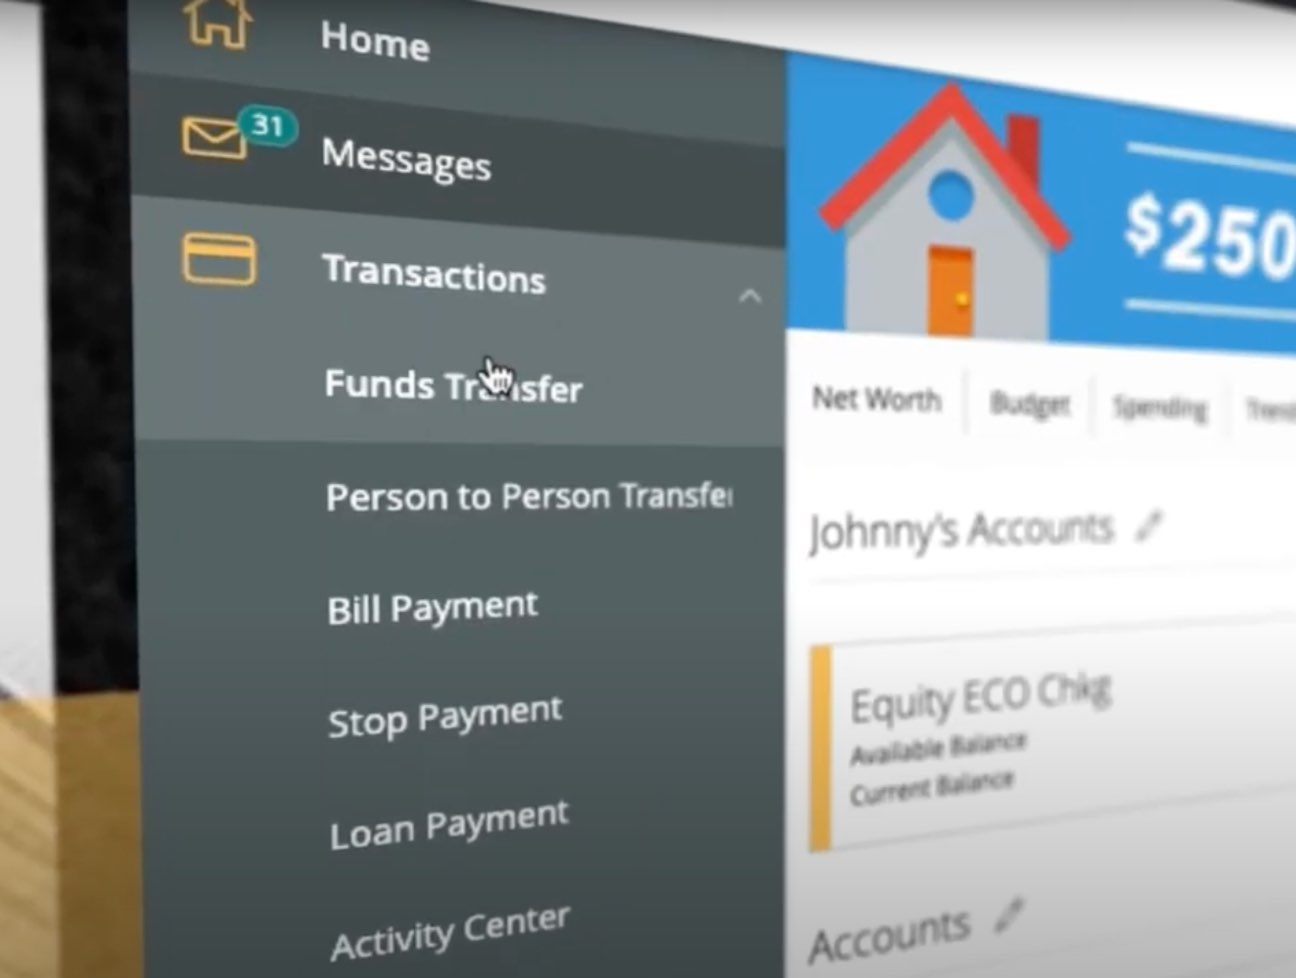 Screenshot of the Equity Bank digital banking app